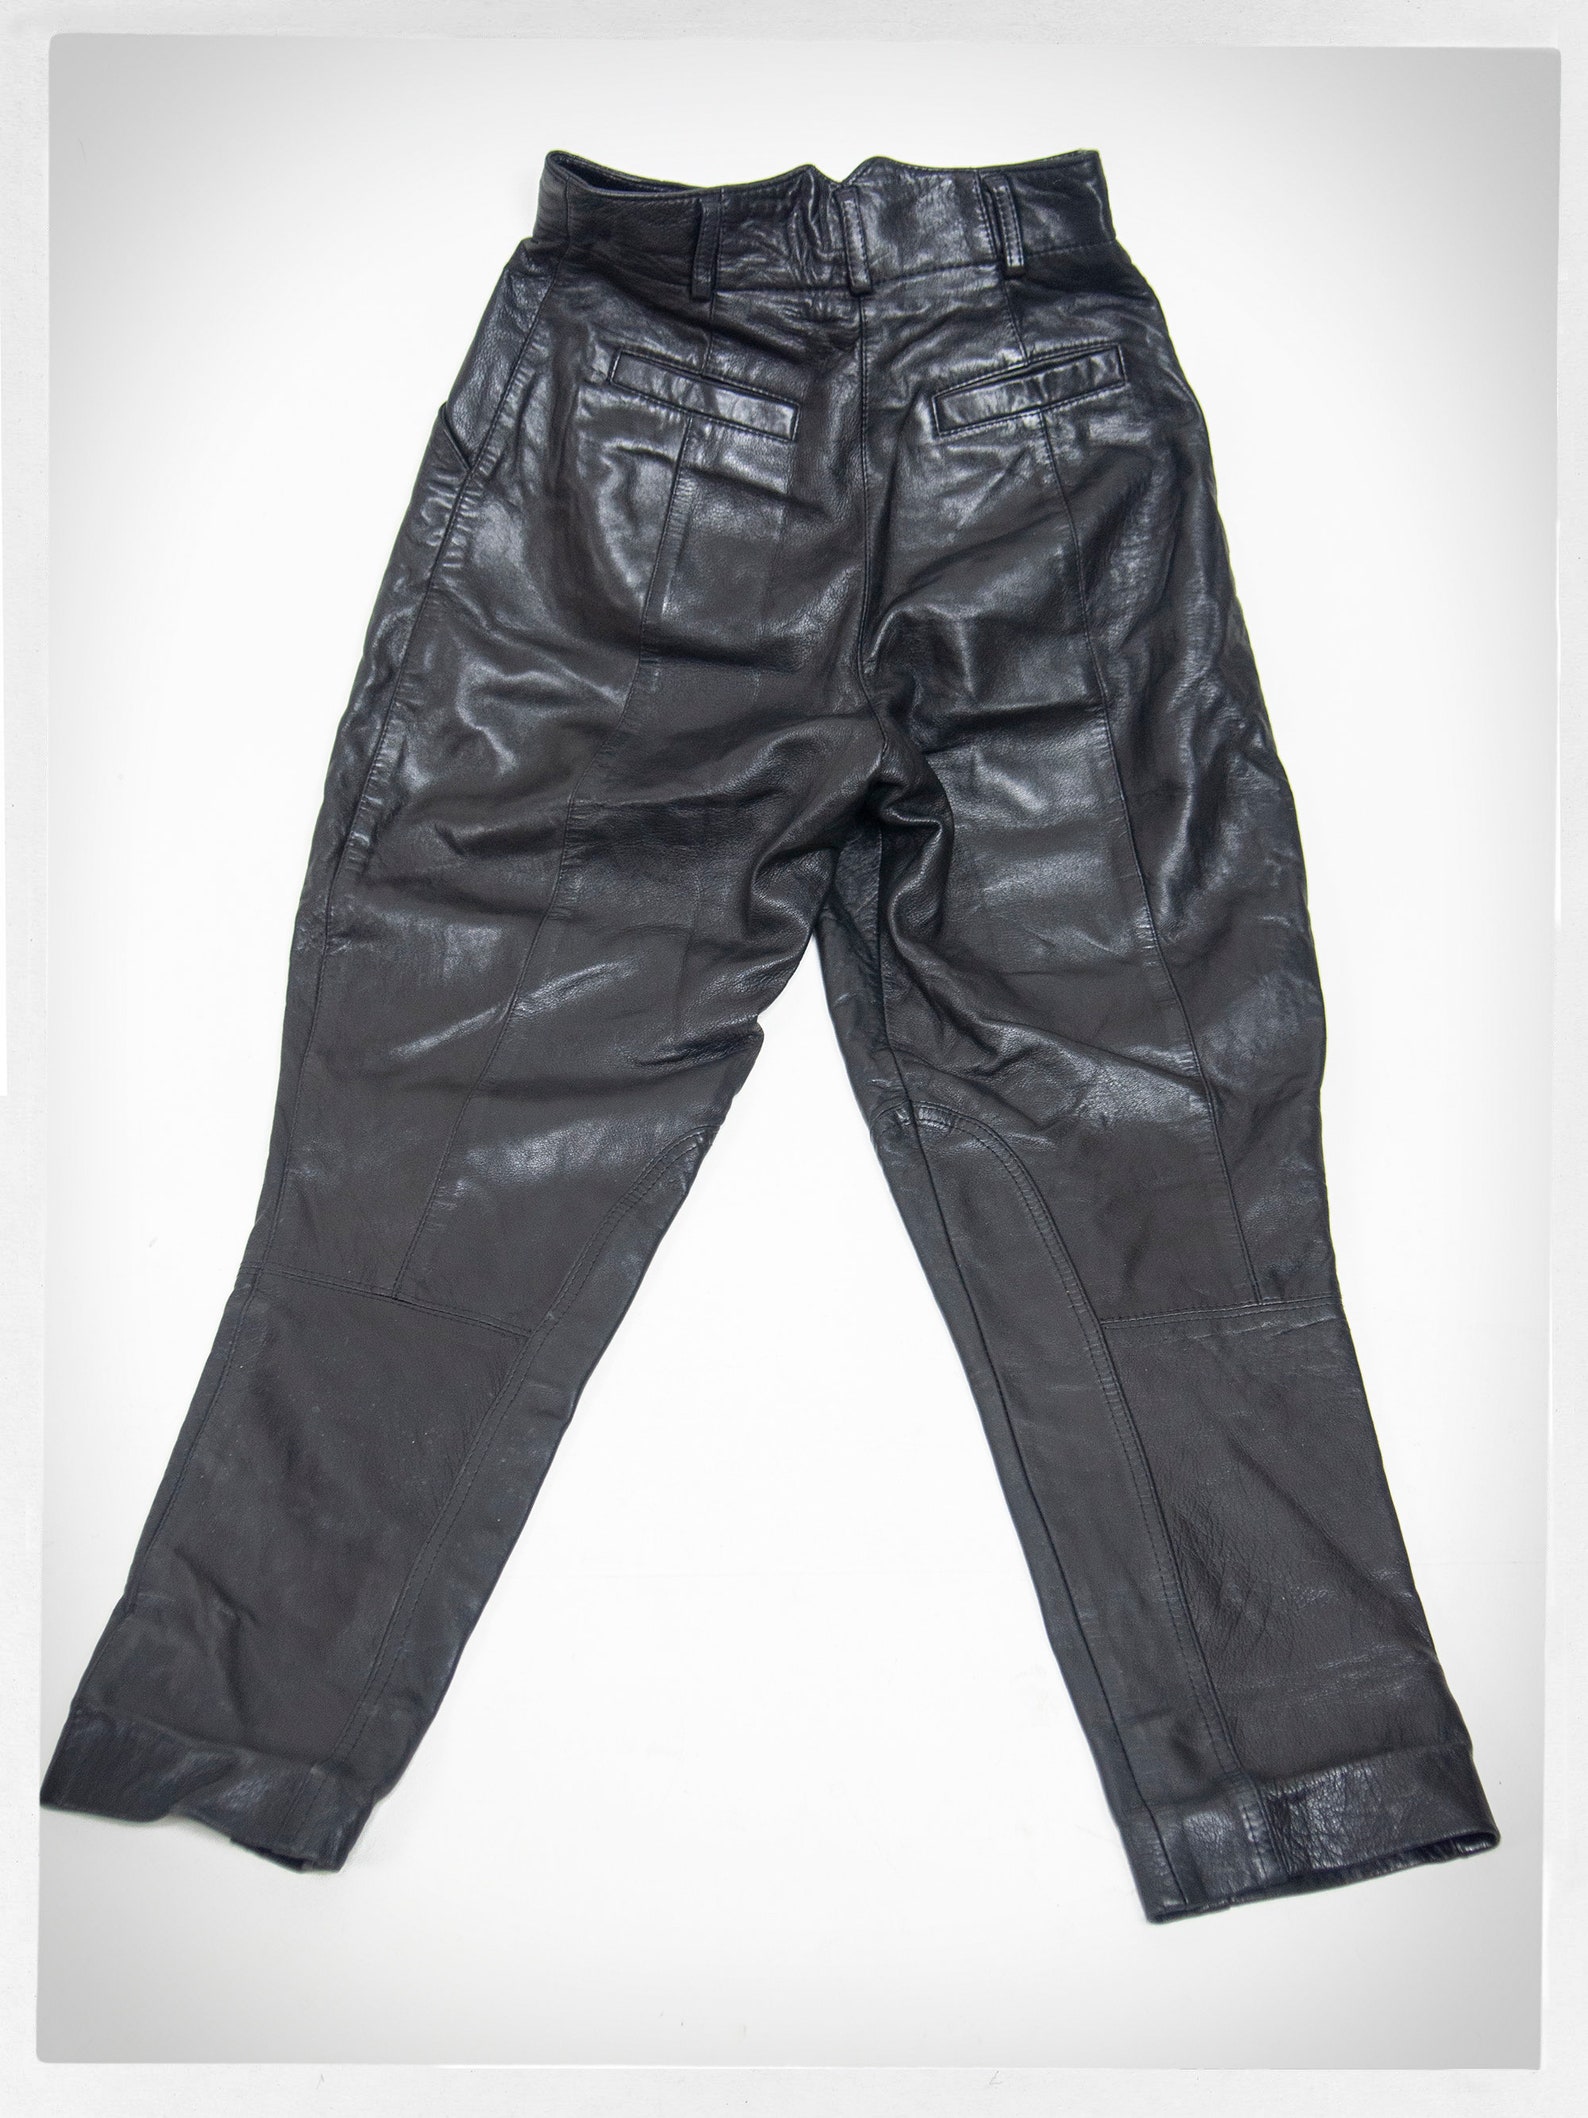 Retro 70s Leather Pants 80s leather JODHPURS Creeds of | Etsy